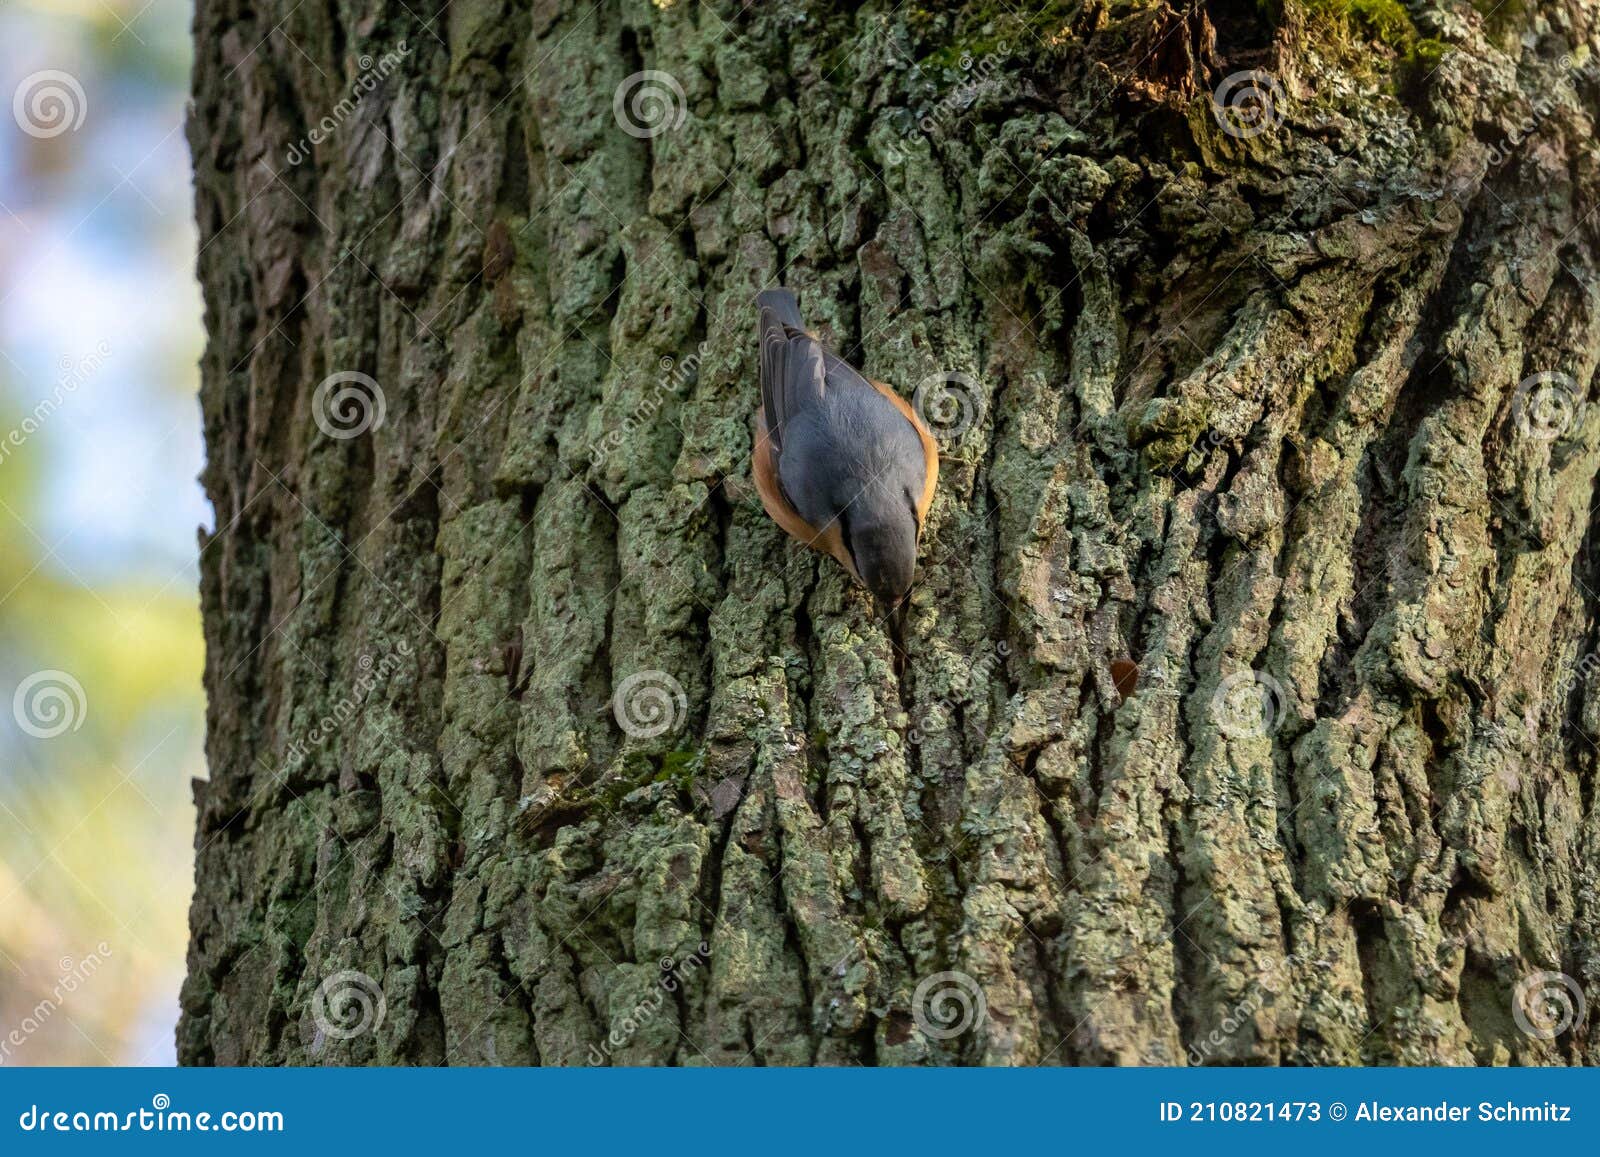 kleiber, bird on a tree in winter sitta europaea, european nuthatch